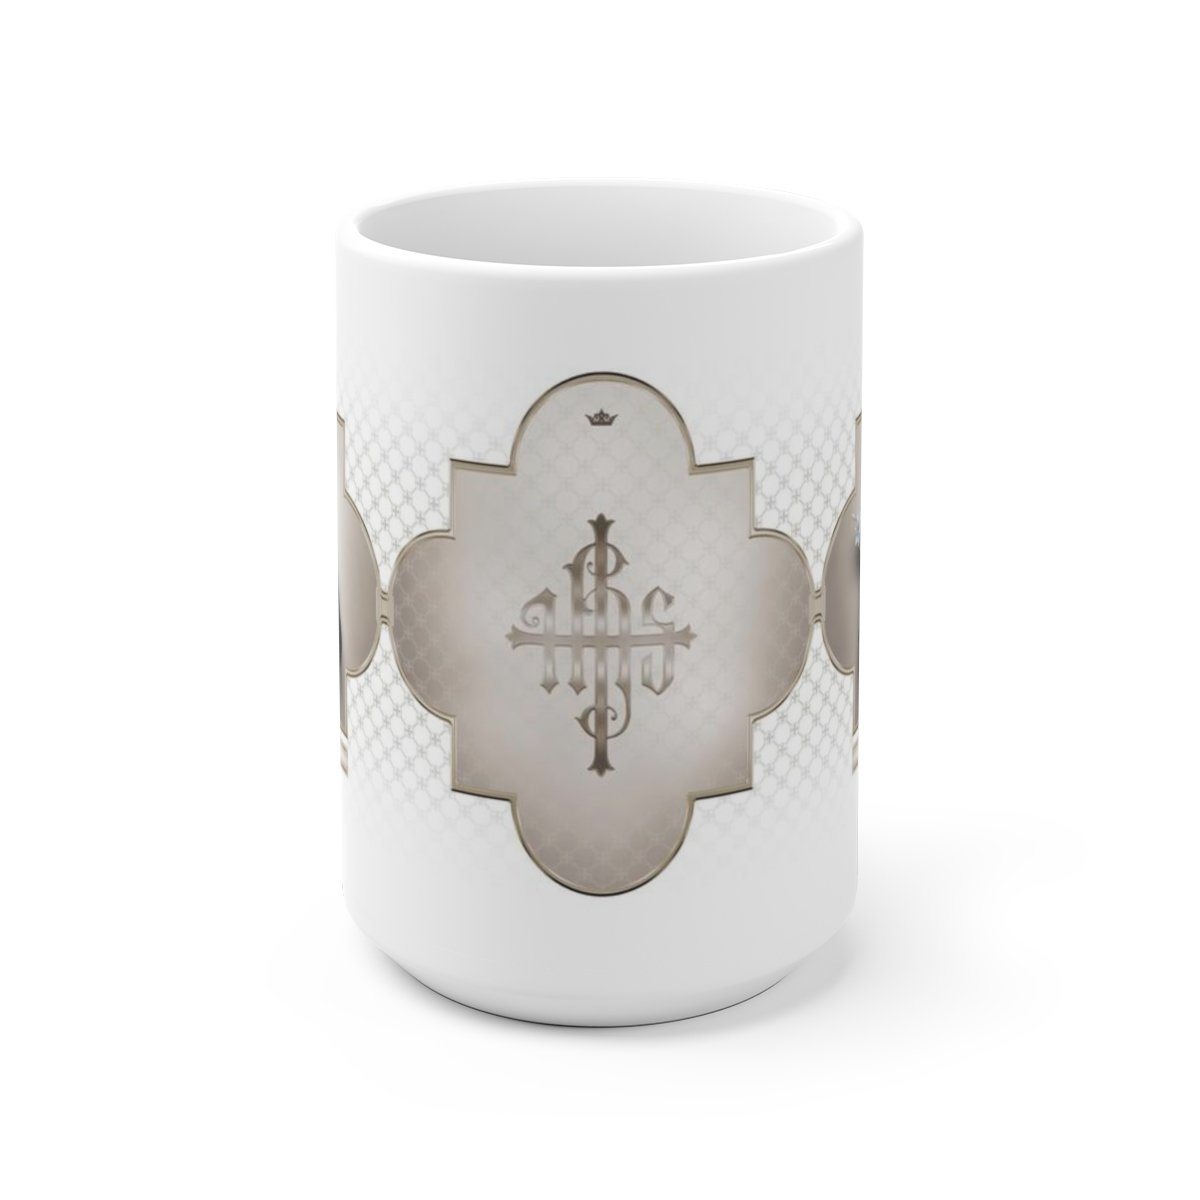 St. Catherine of Siena Ceramic Mug - VENXARA®